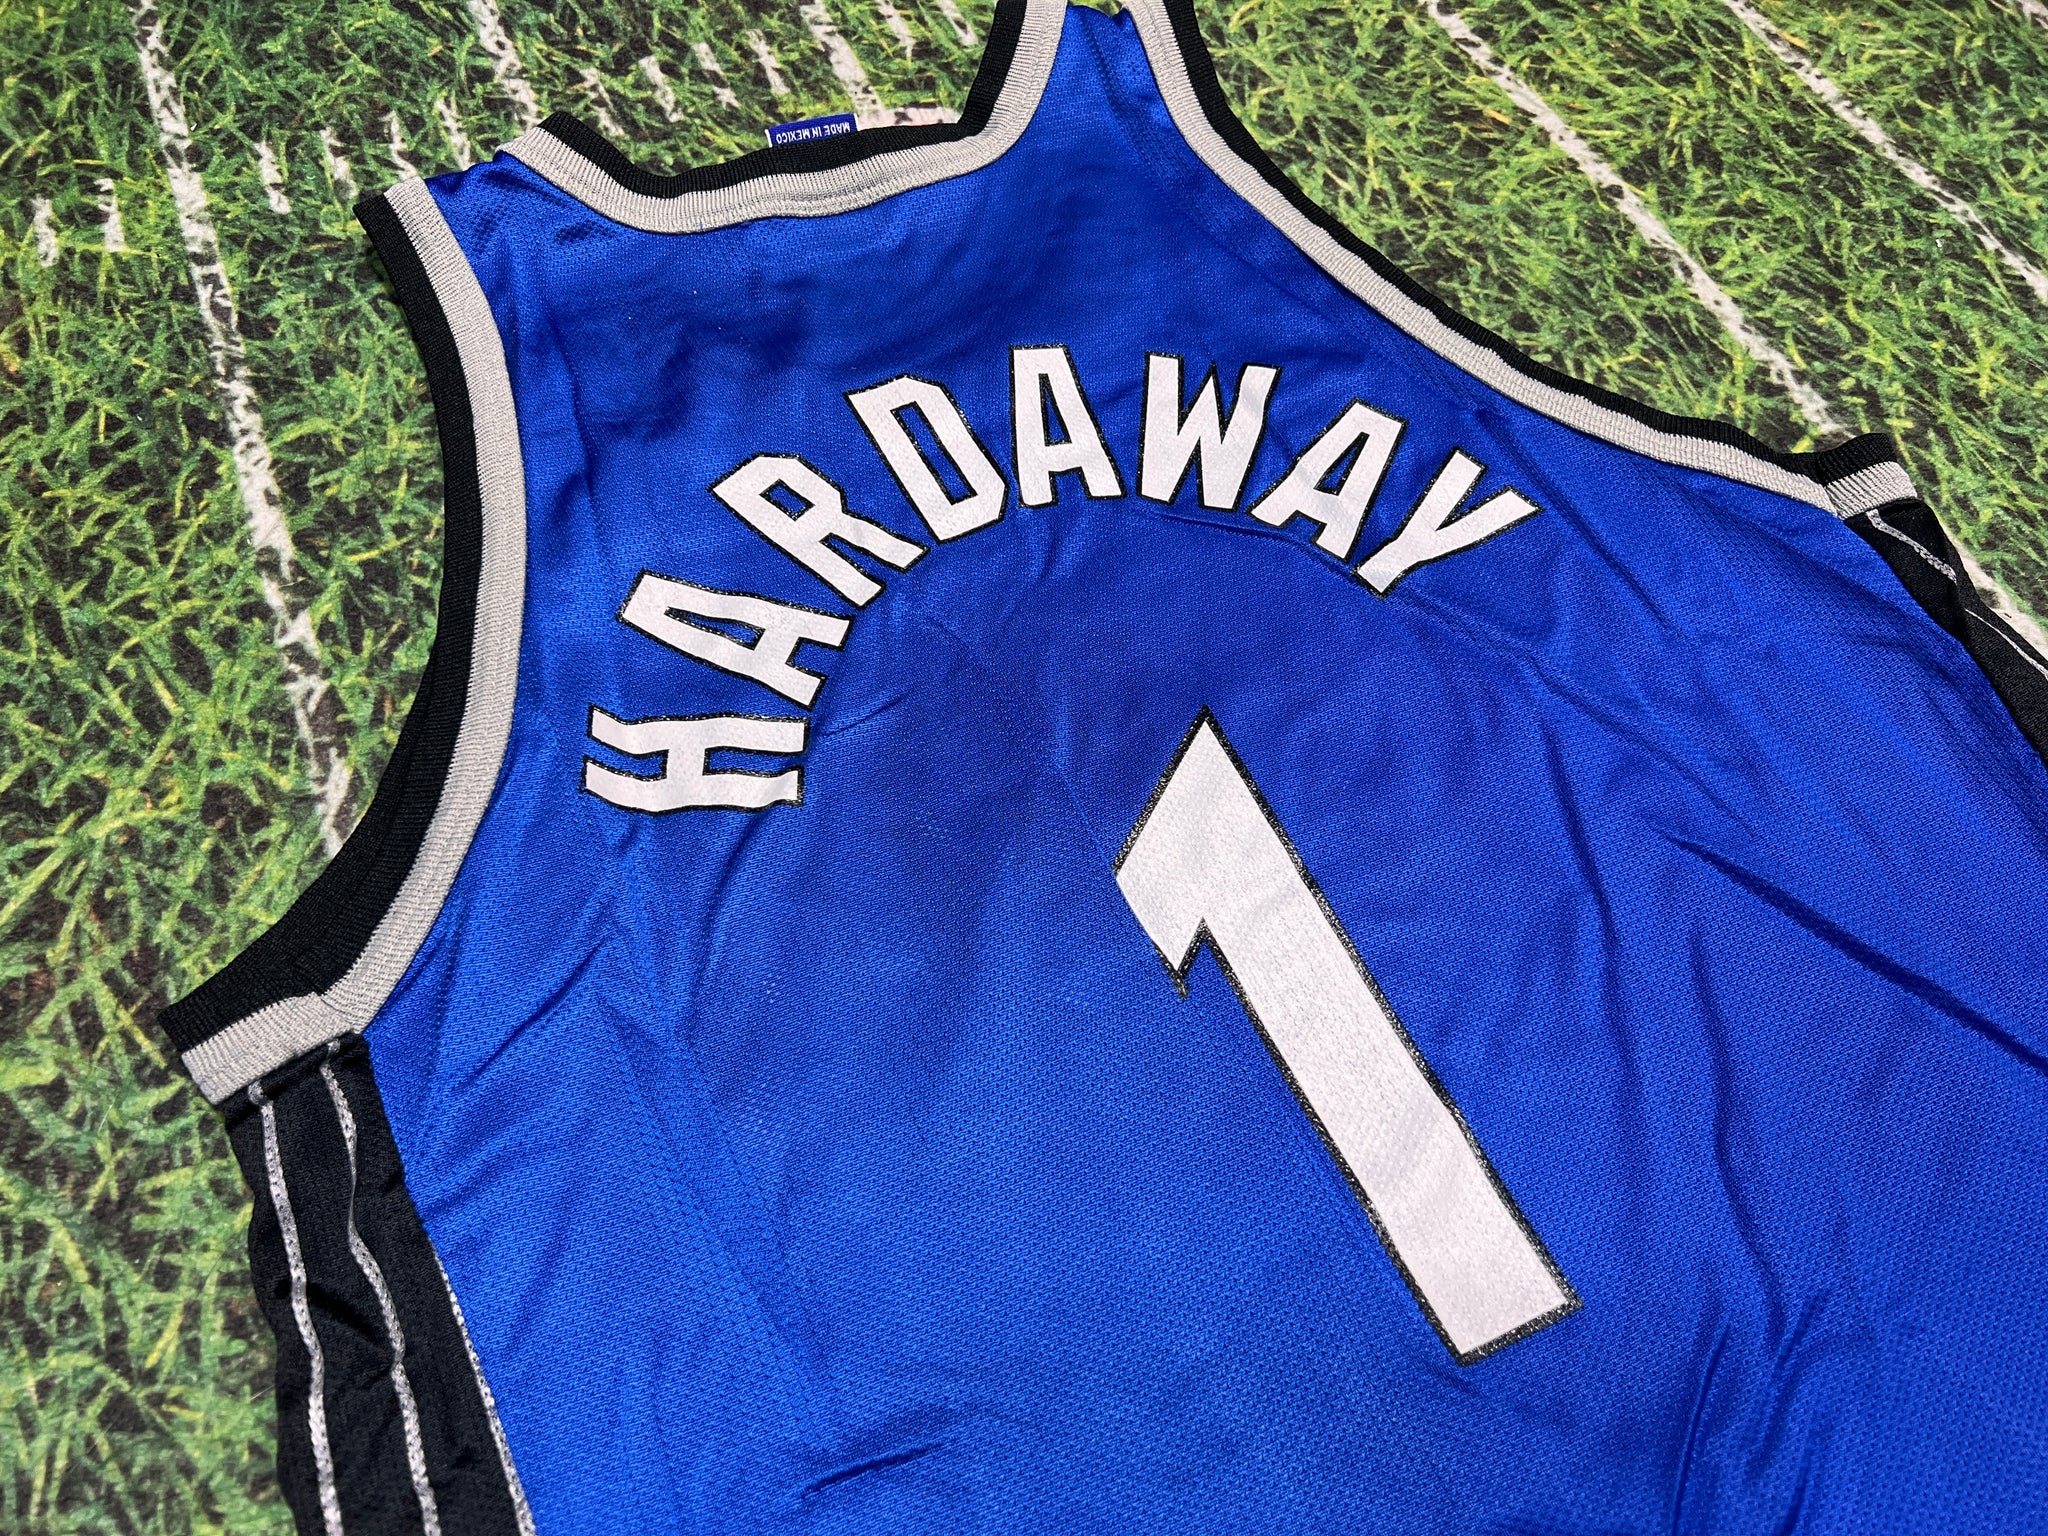 Vintage Penny Hardaway #1 Orlando Magic NBA Authentic Champion